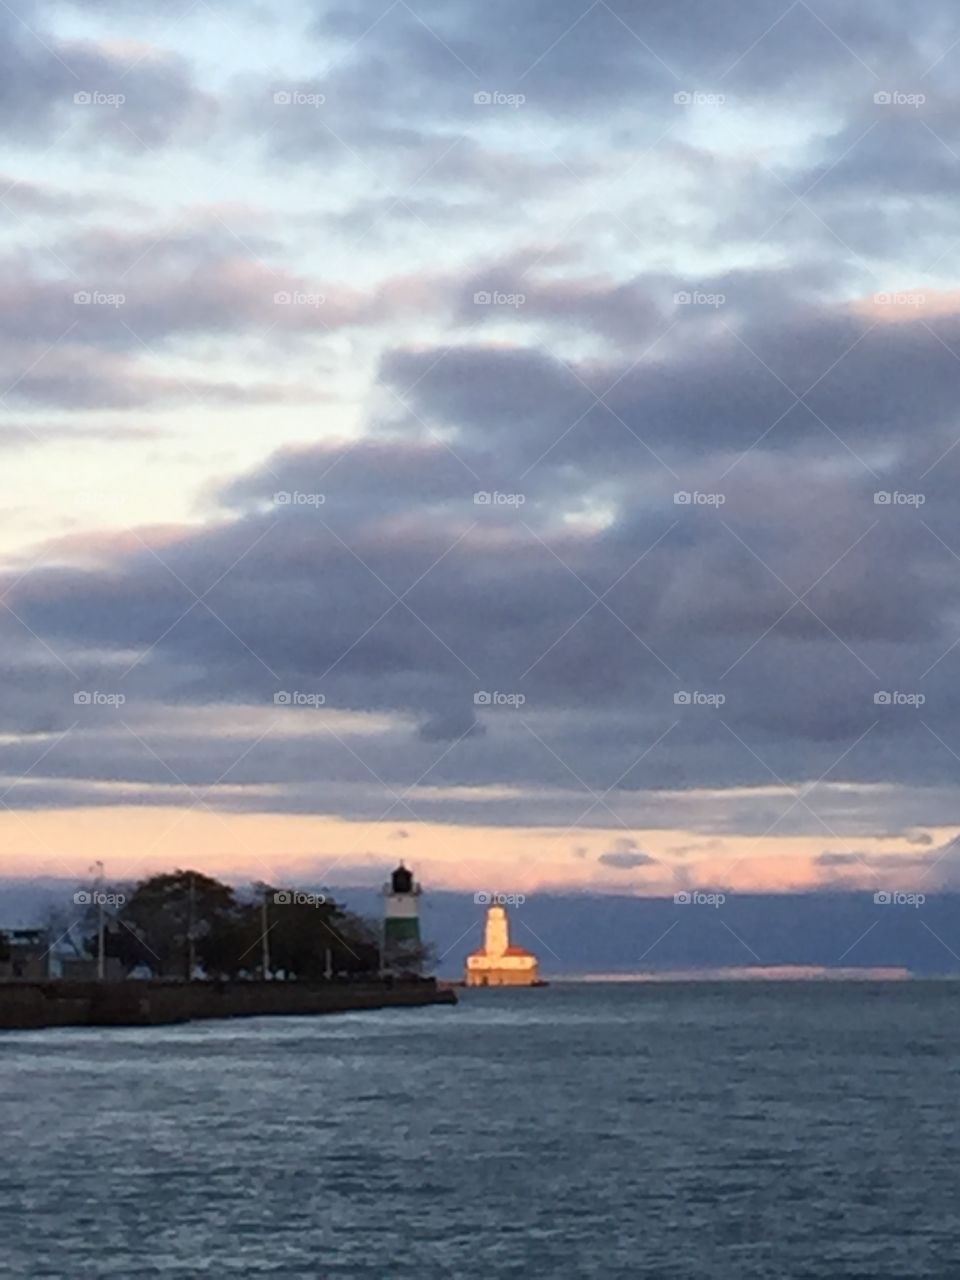 Lighthouse on Lake Michigan. 